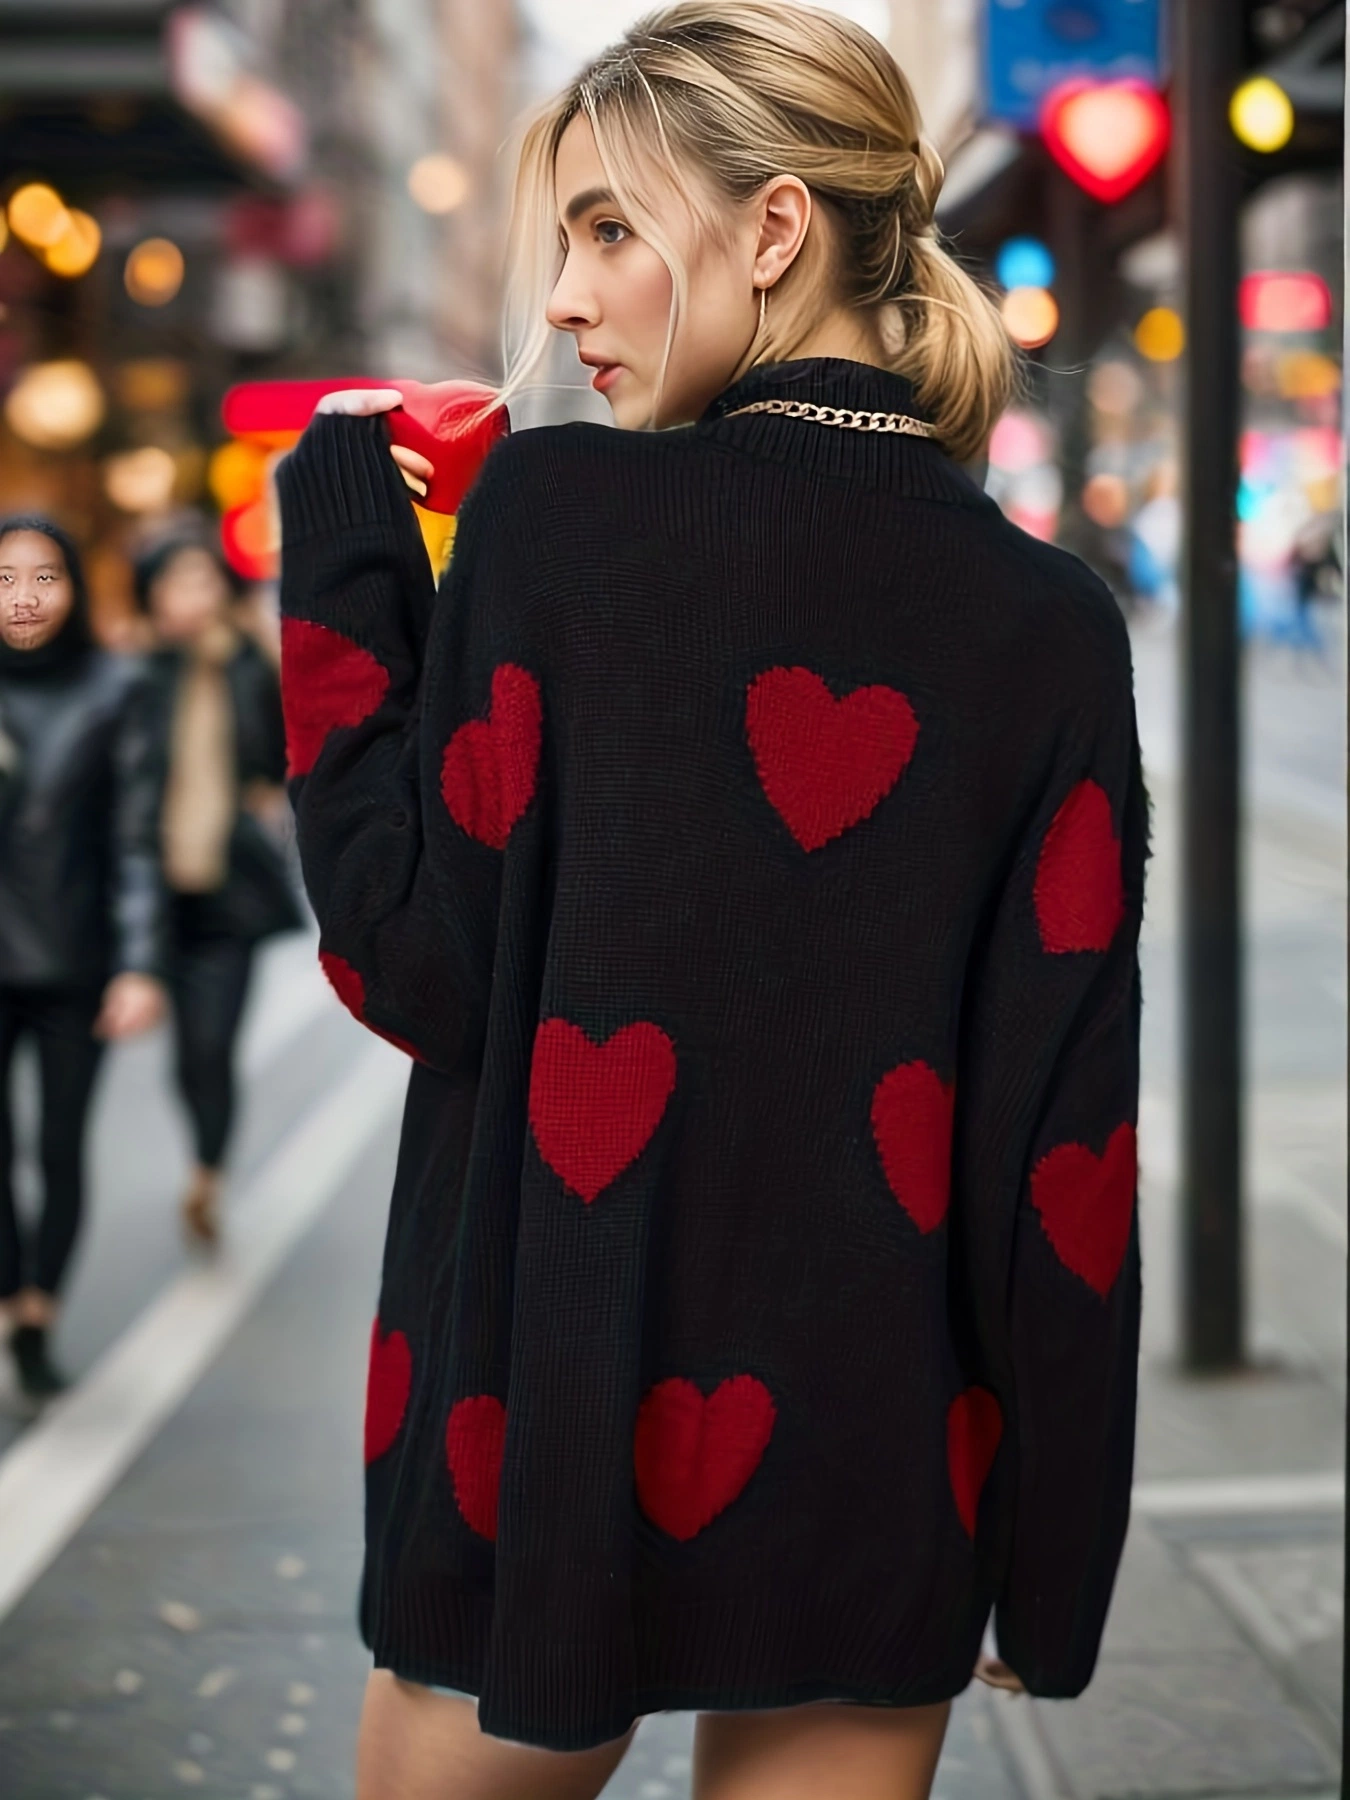 Heart-Shaped Warm Sweater